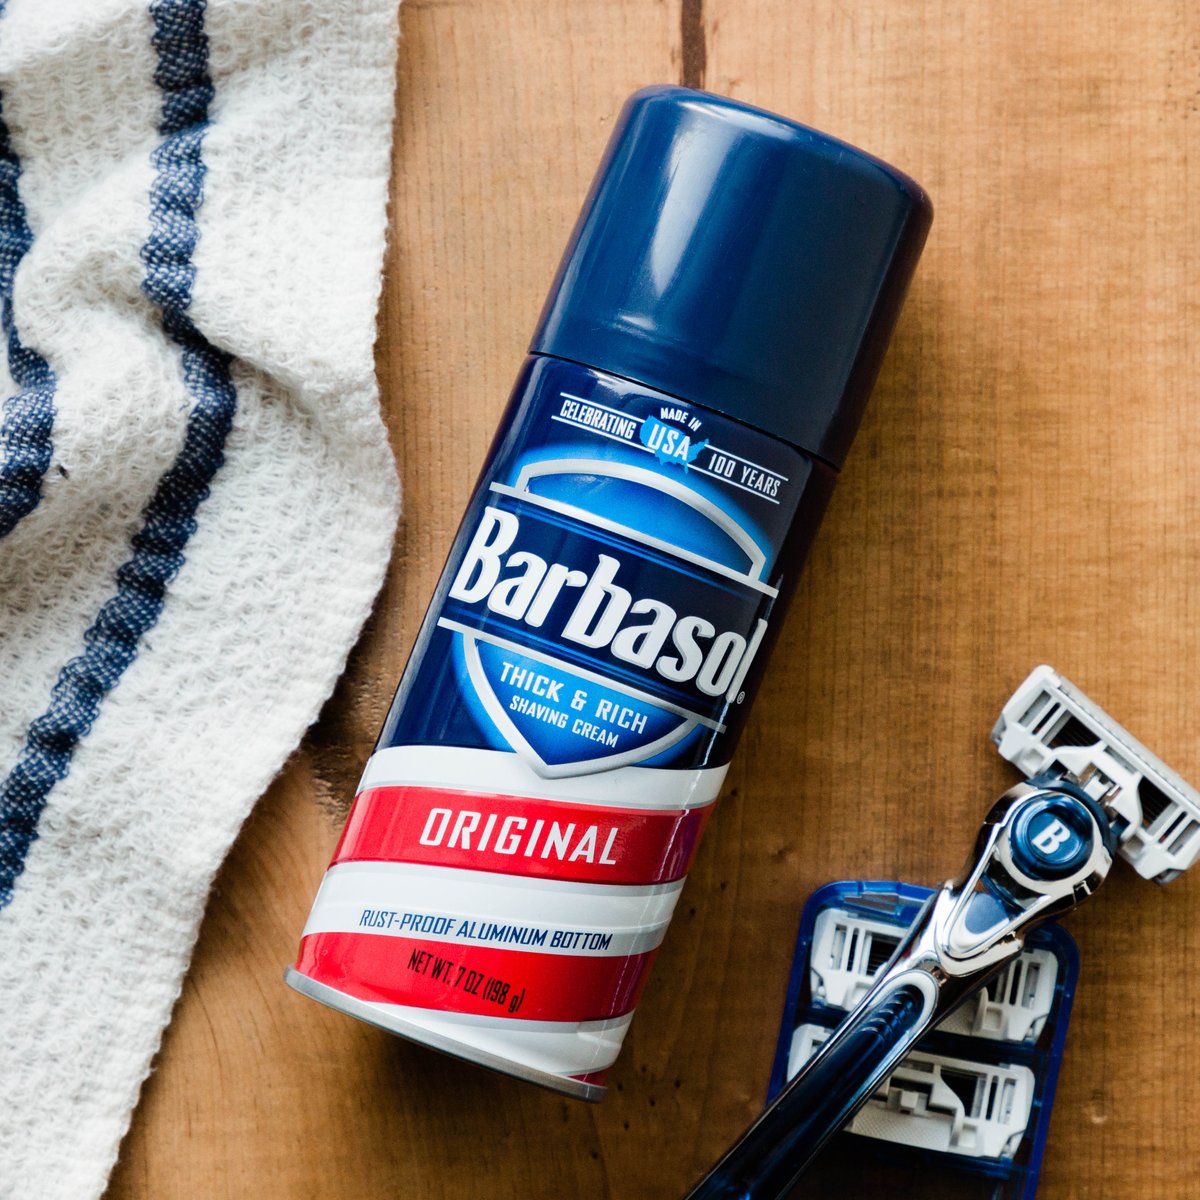 Barbasol Shave Cream: